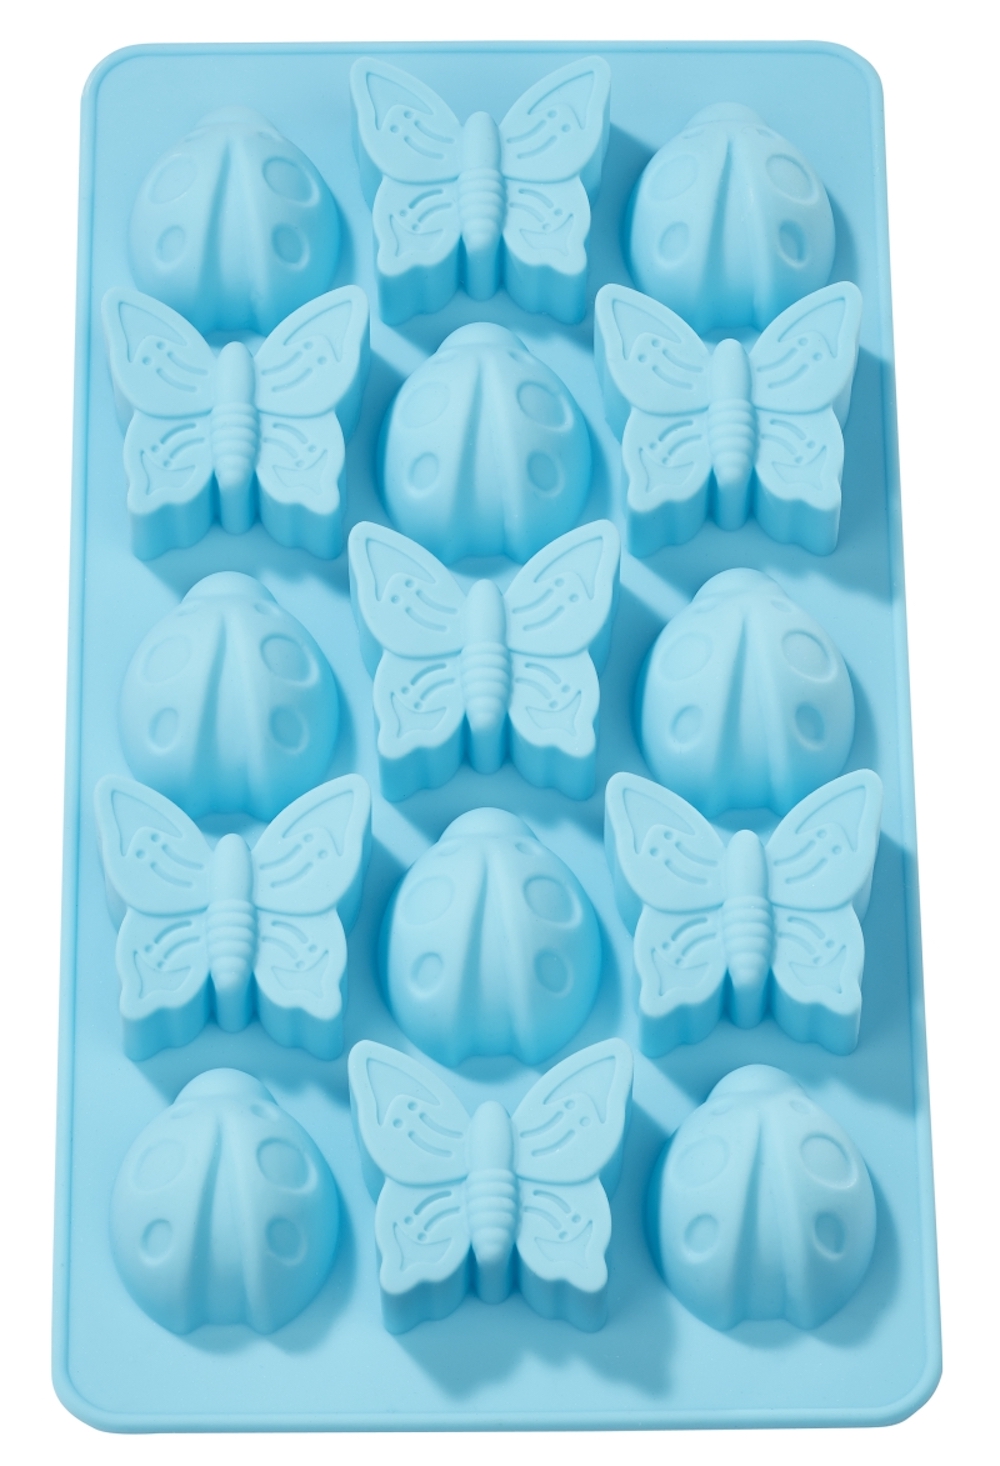 Silikon Giessform Gießform Marienkäfer - Schmetterling, 20 x 10cm, lebensmittelecht